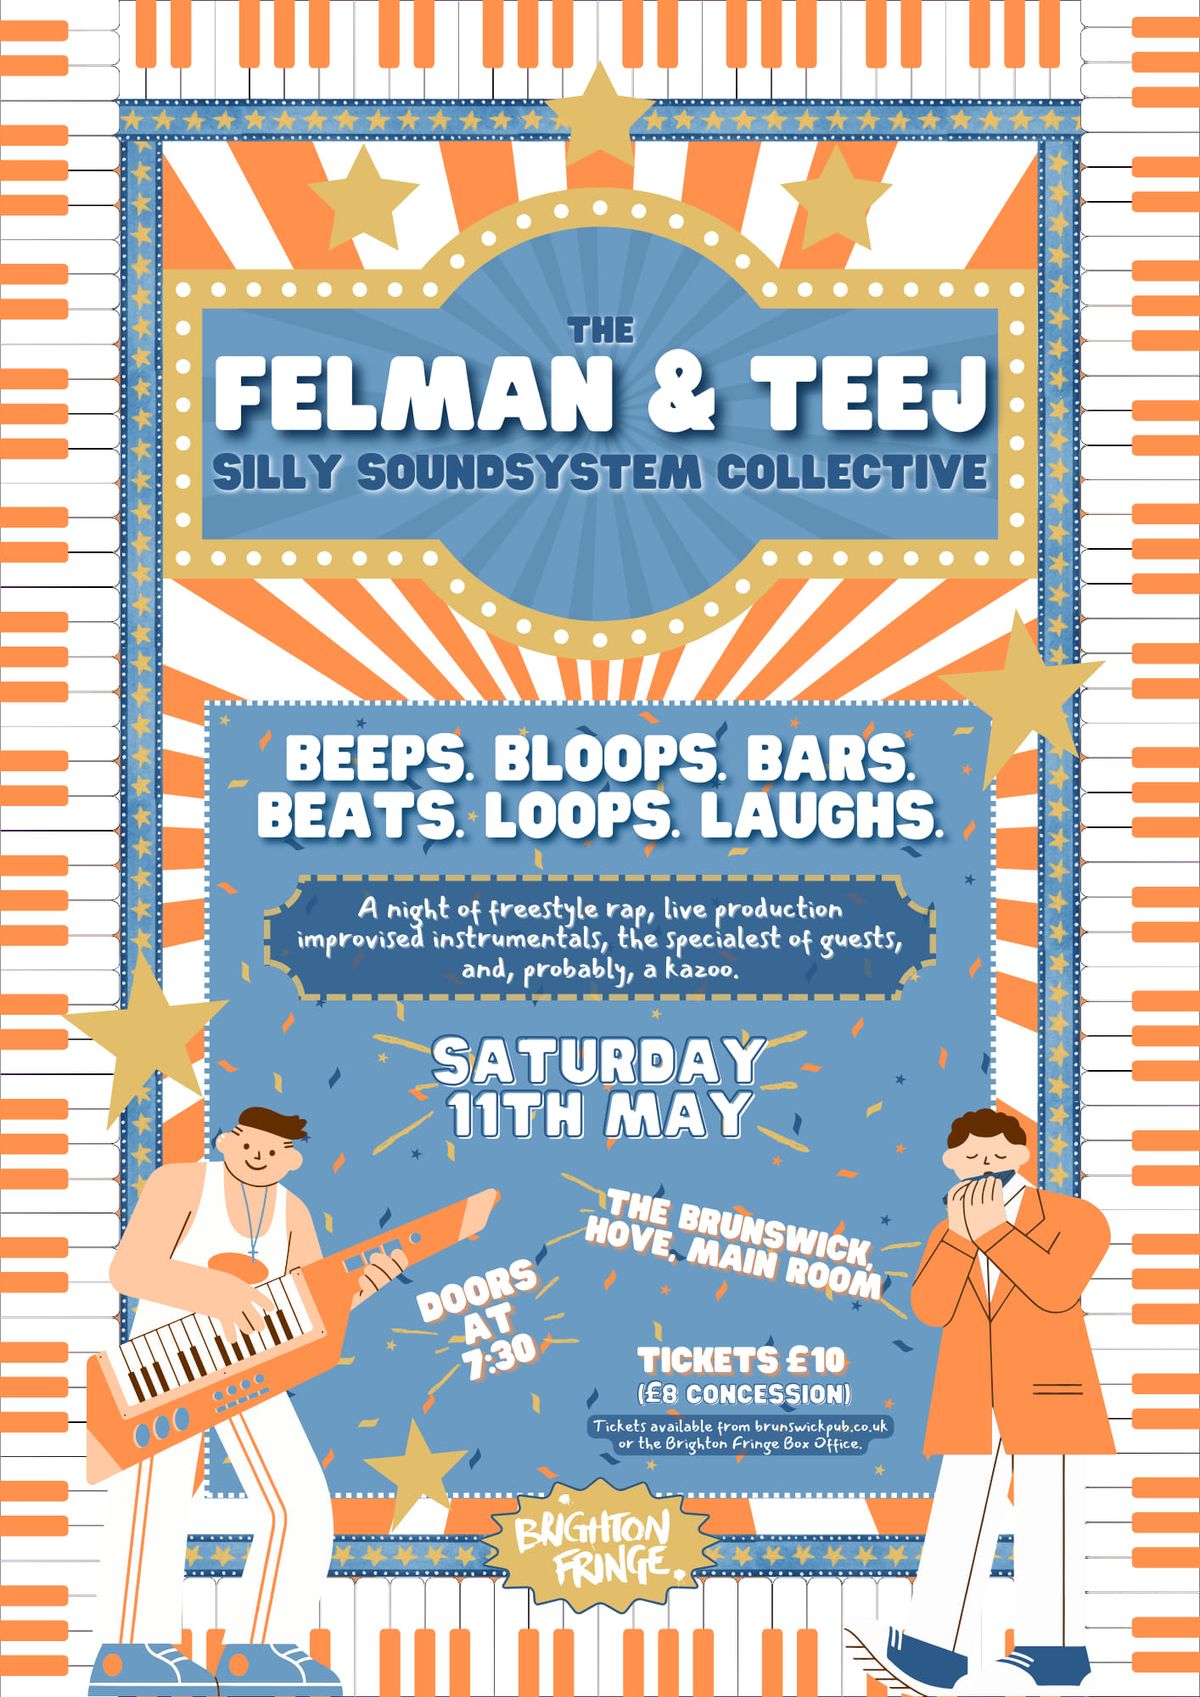 The Felman & Teej Silly Soundsystem Collective DO THE BRIGHTON FRINGE